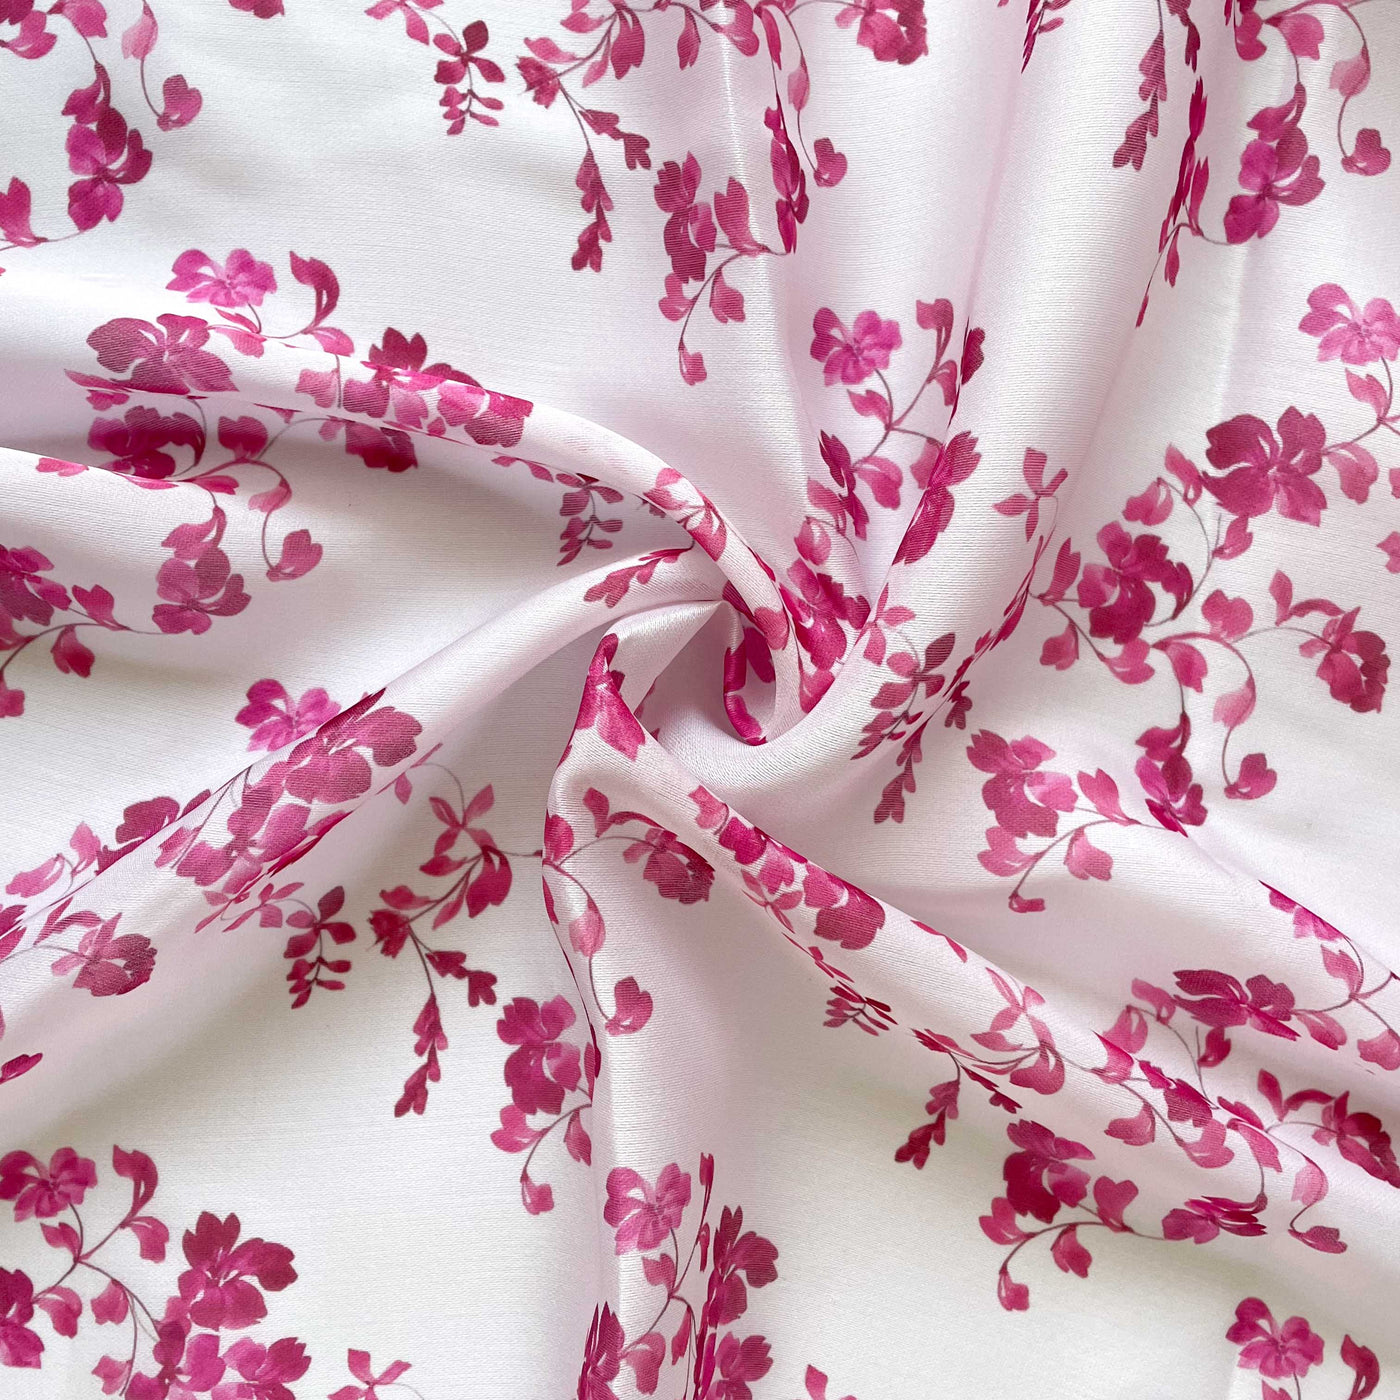 Digital Printed Organza Fabric Fabric Magenta Pink Floral Vines Printed Soft Organza Fabric (Width 44 Inches)